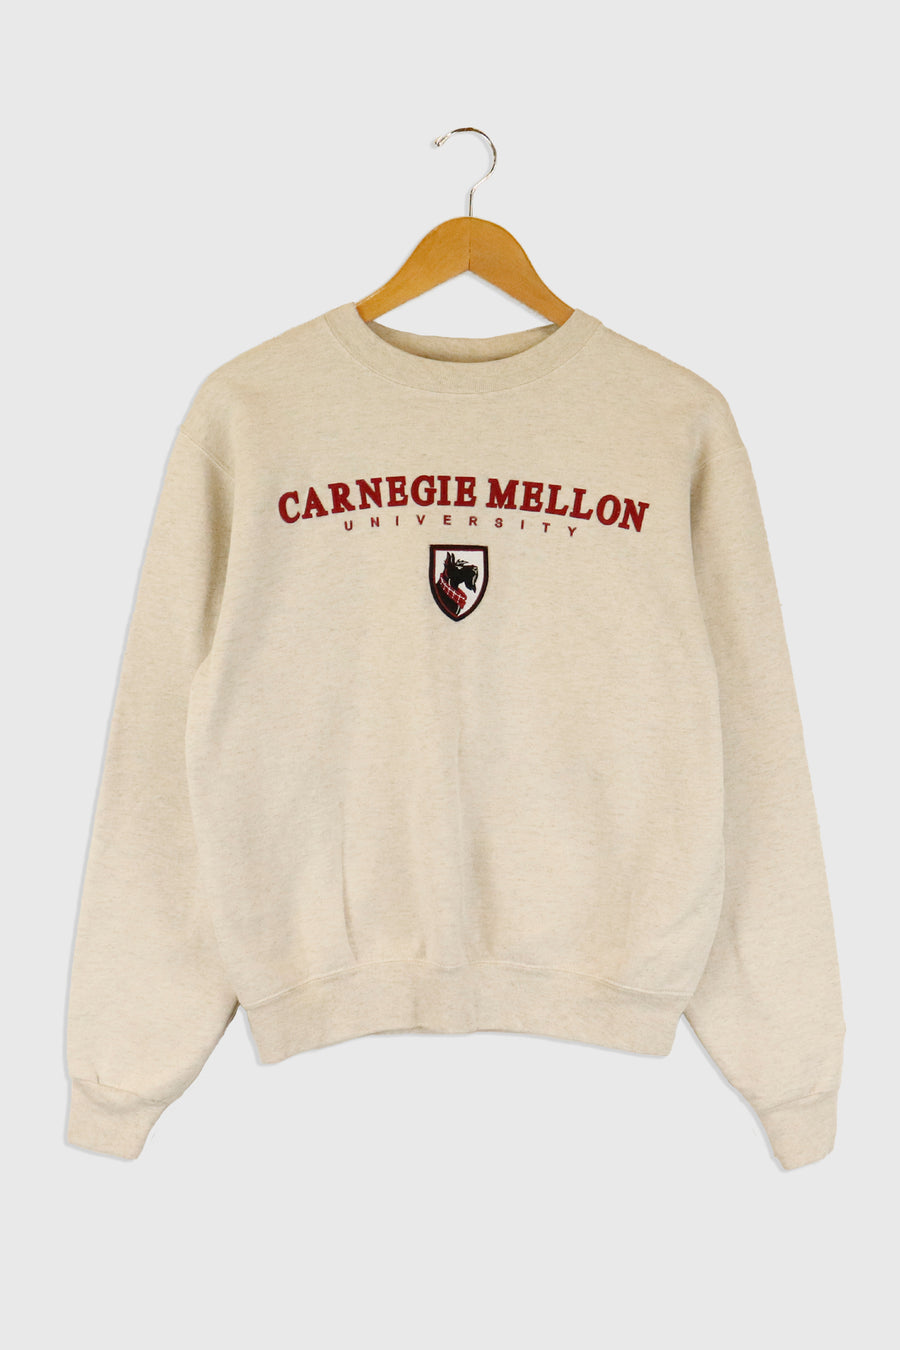 Vintage Carnage Mellon University Logo Dog Sweatshirt Sz S